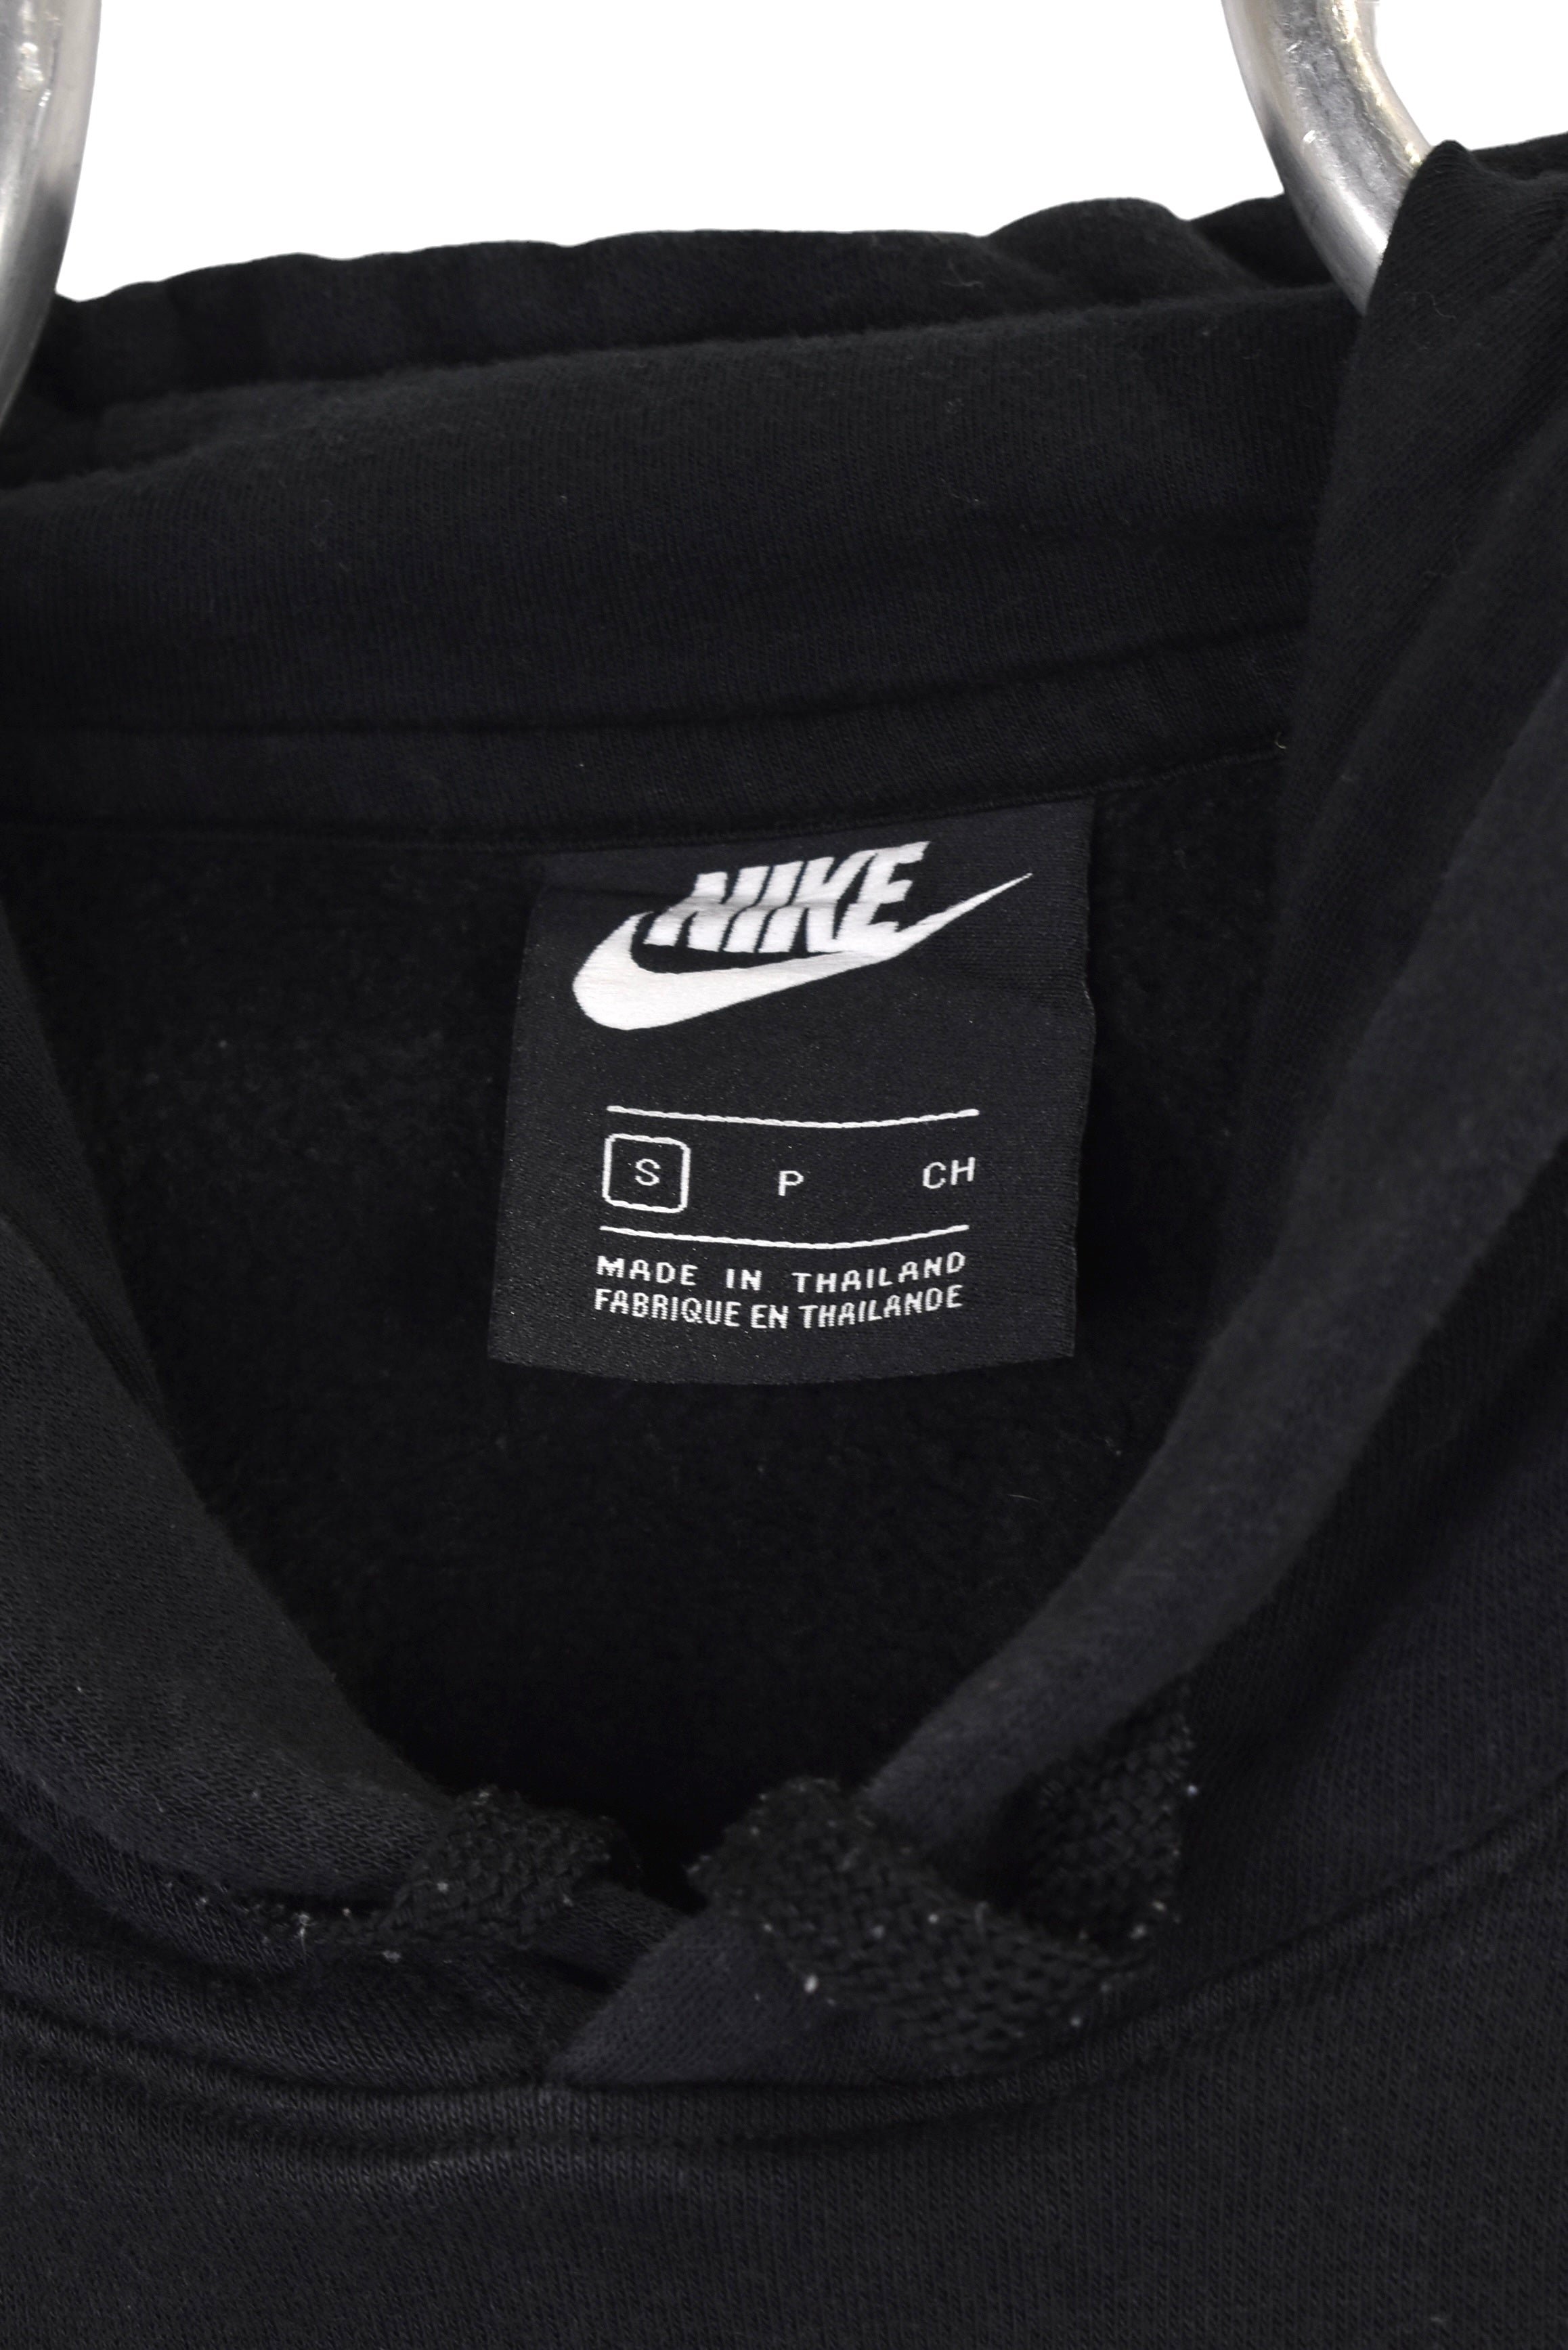 Vintage Nike hoodie, black embroidered sweatshirt - Small